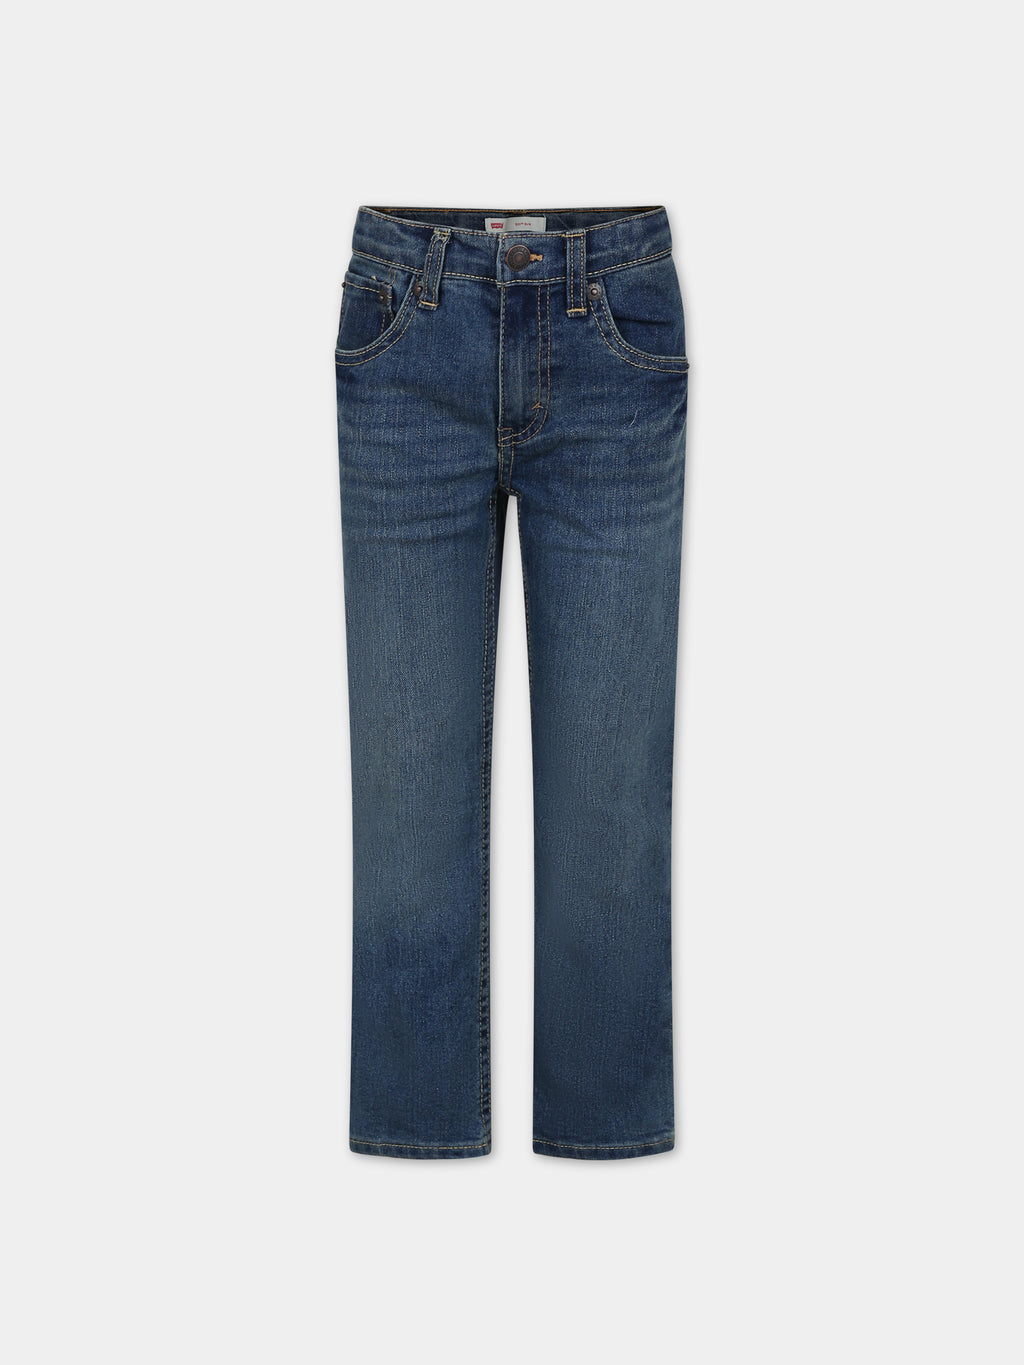 511 denim jeans for boy